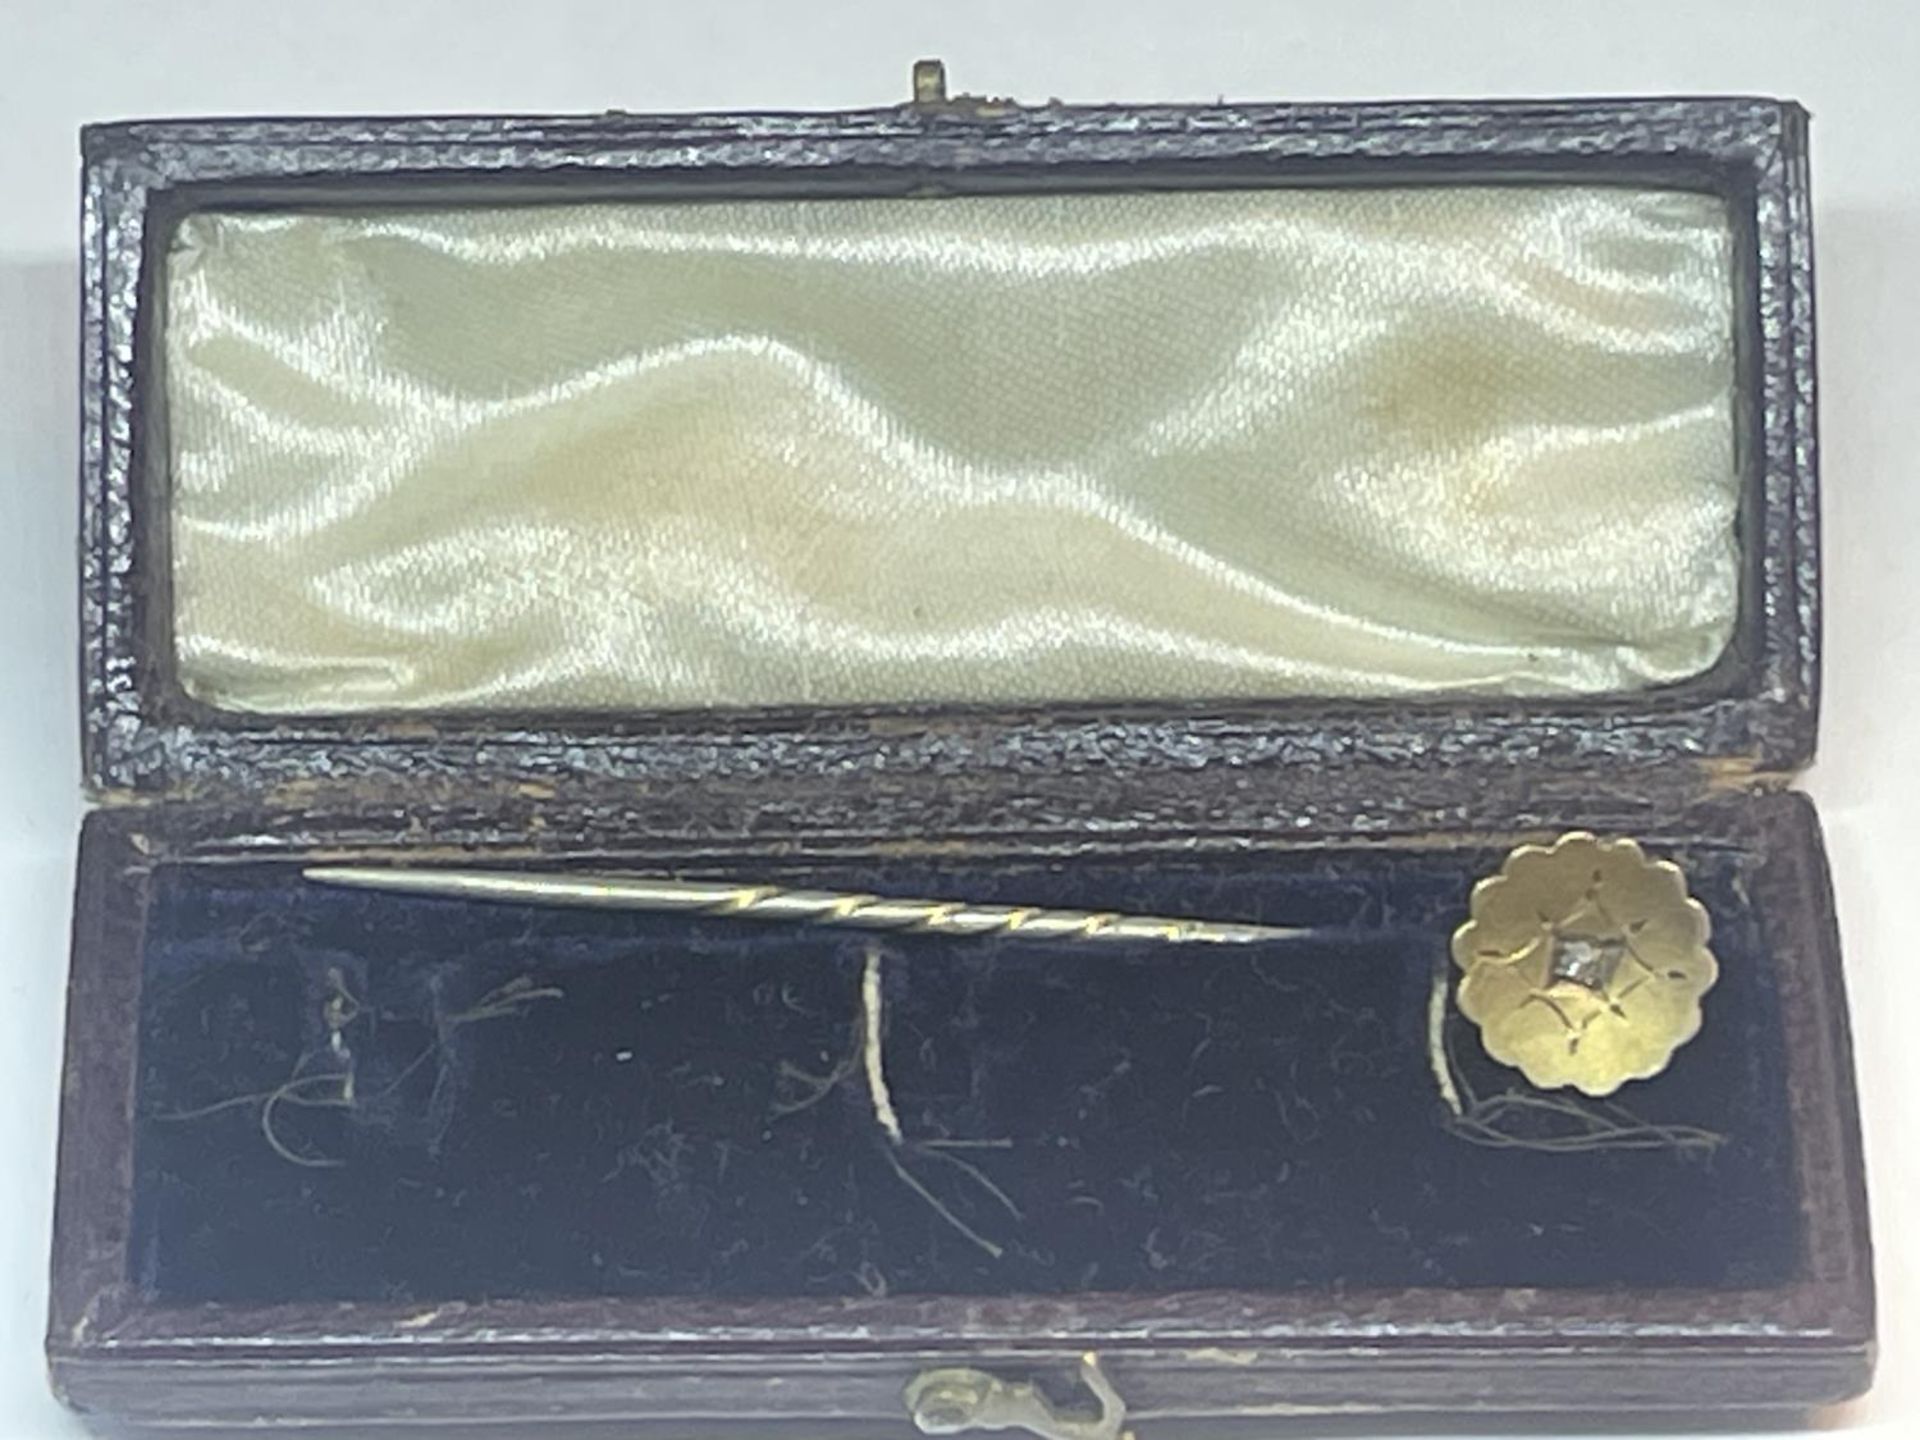 A VINTAGE 9 CARAT GOLD STICK PIN IN A PRESENTATION BOX